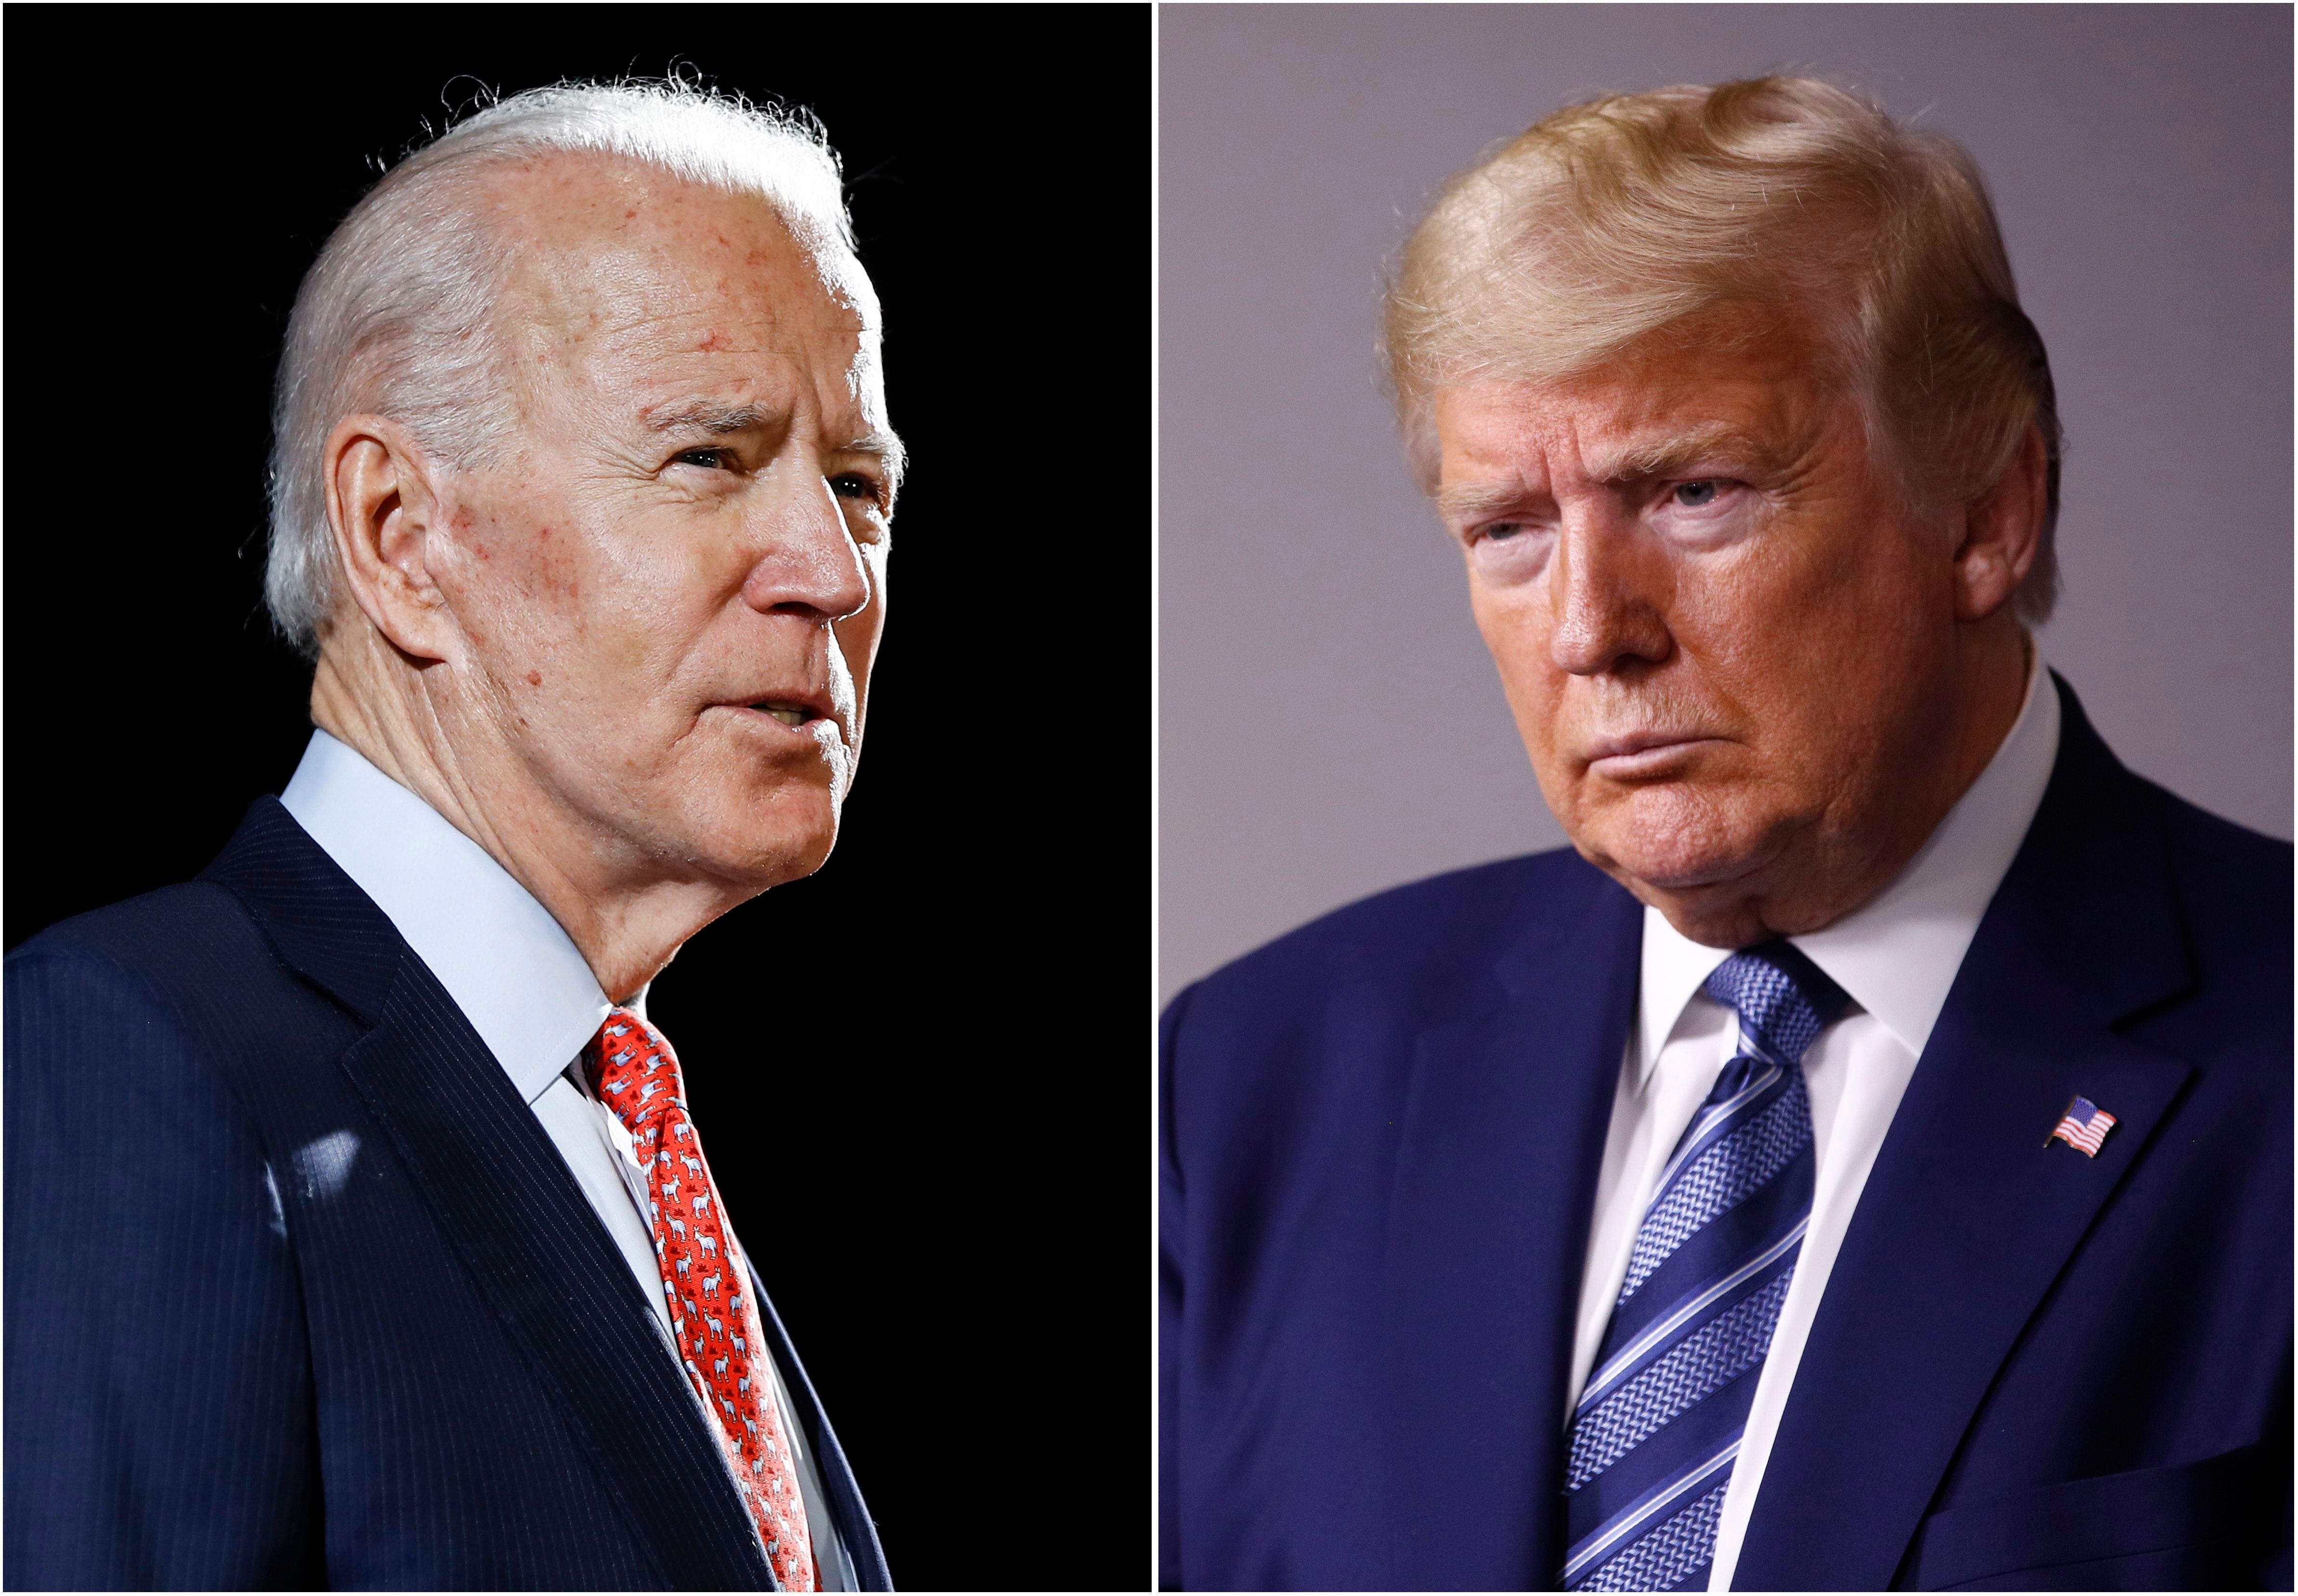 Os rivais Joe Biden e Donald Trump, que se enfrentam em debate nresta terça. 